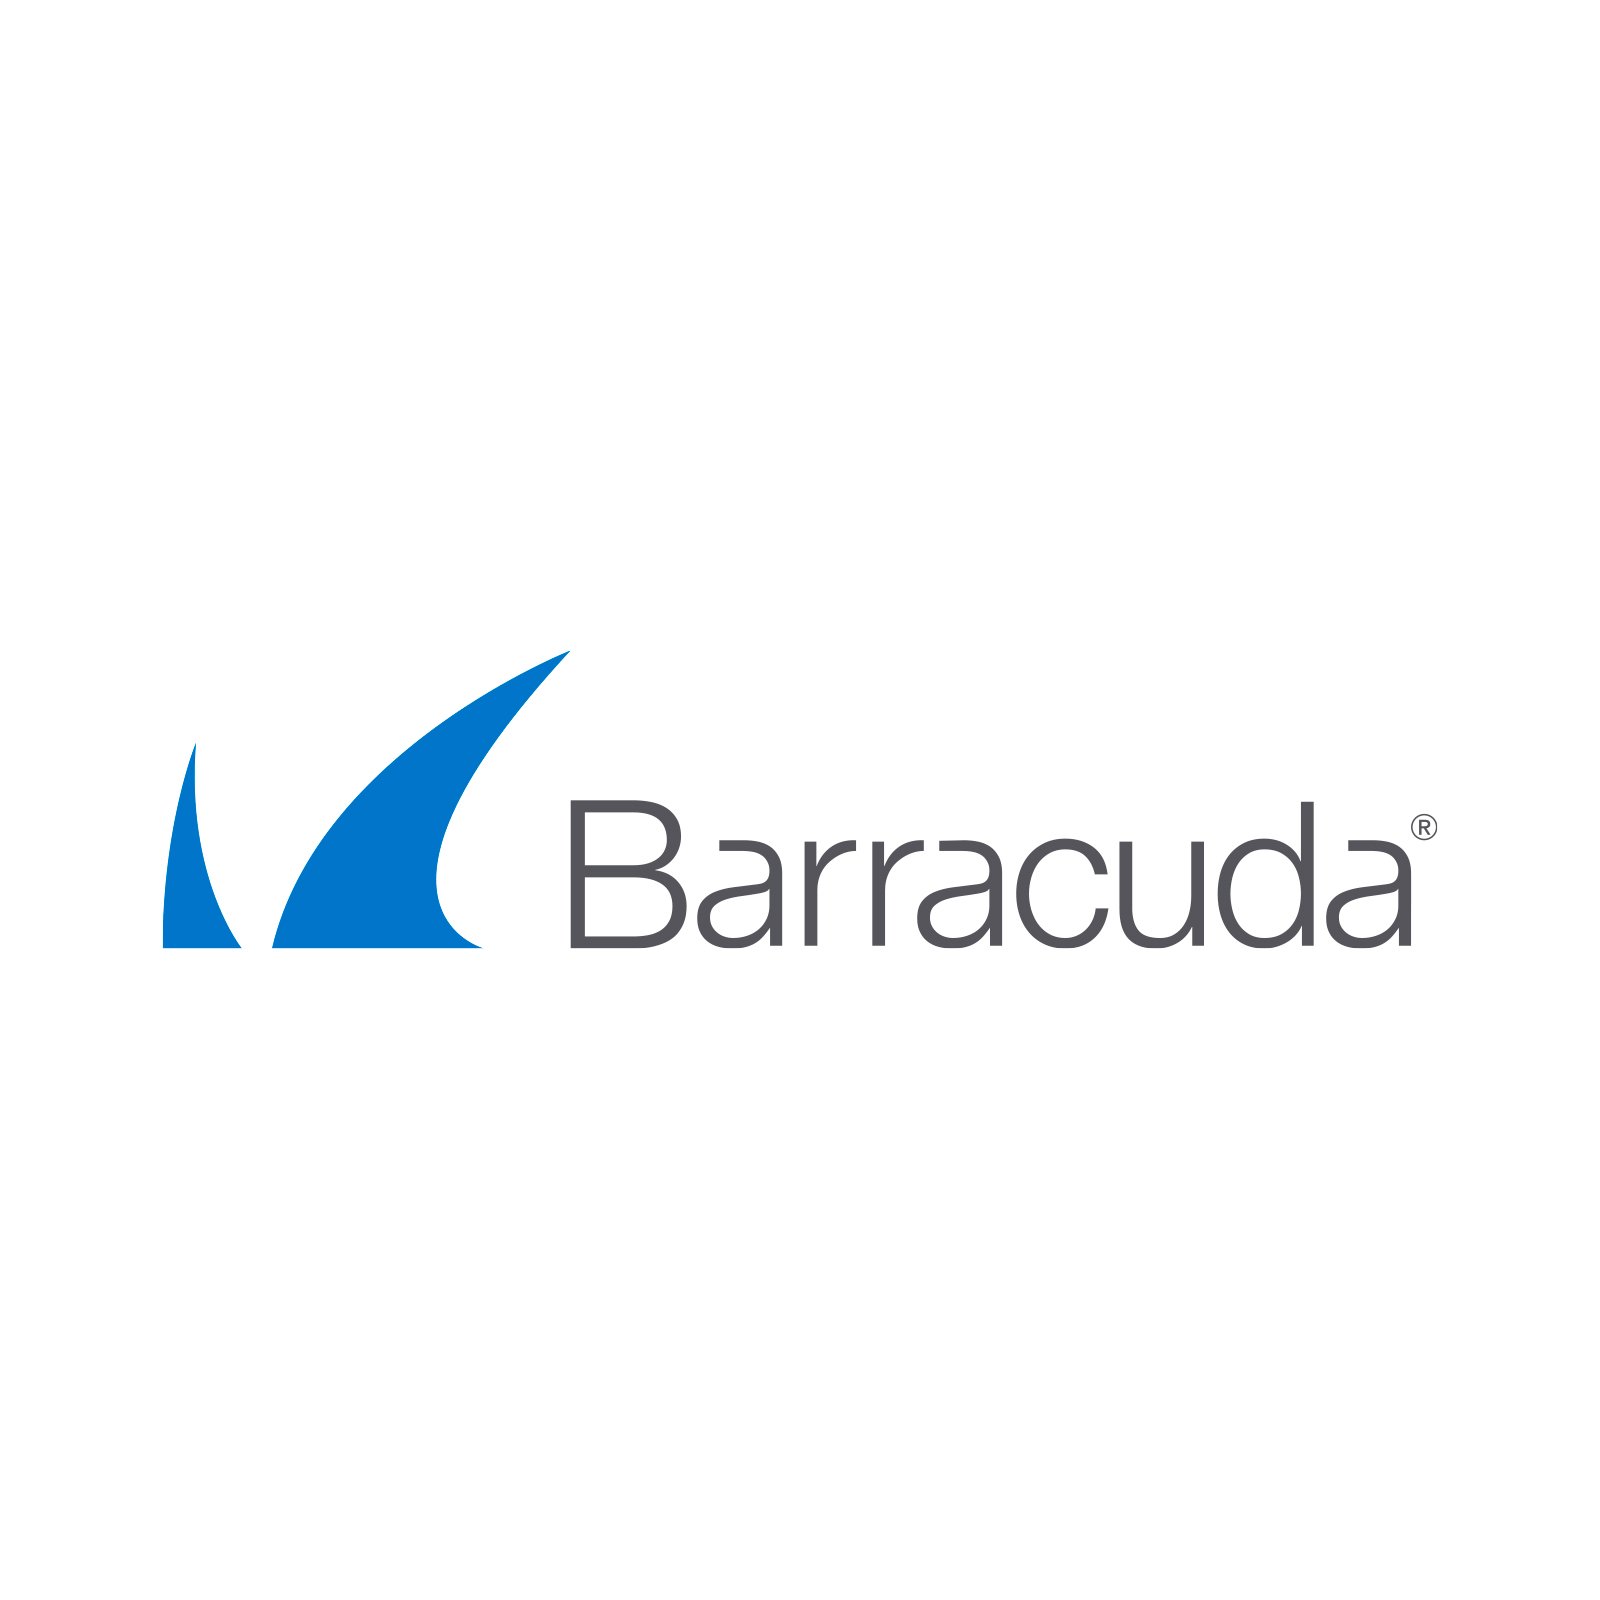 Barracuda.jpg